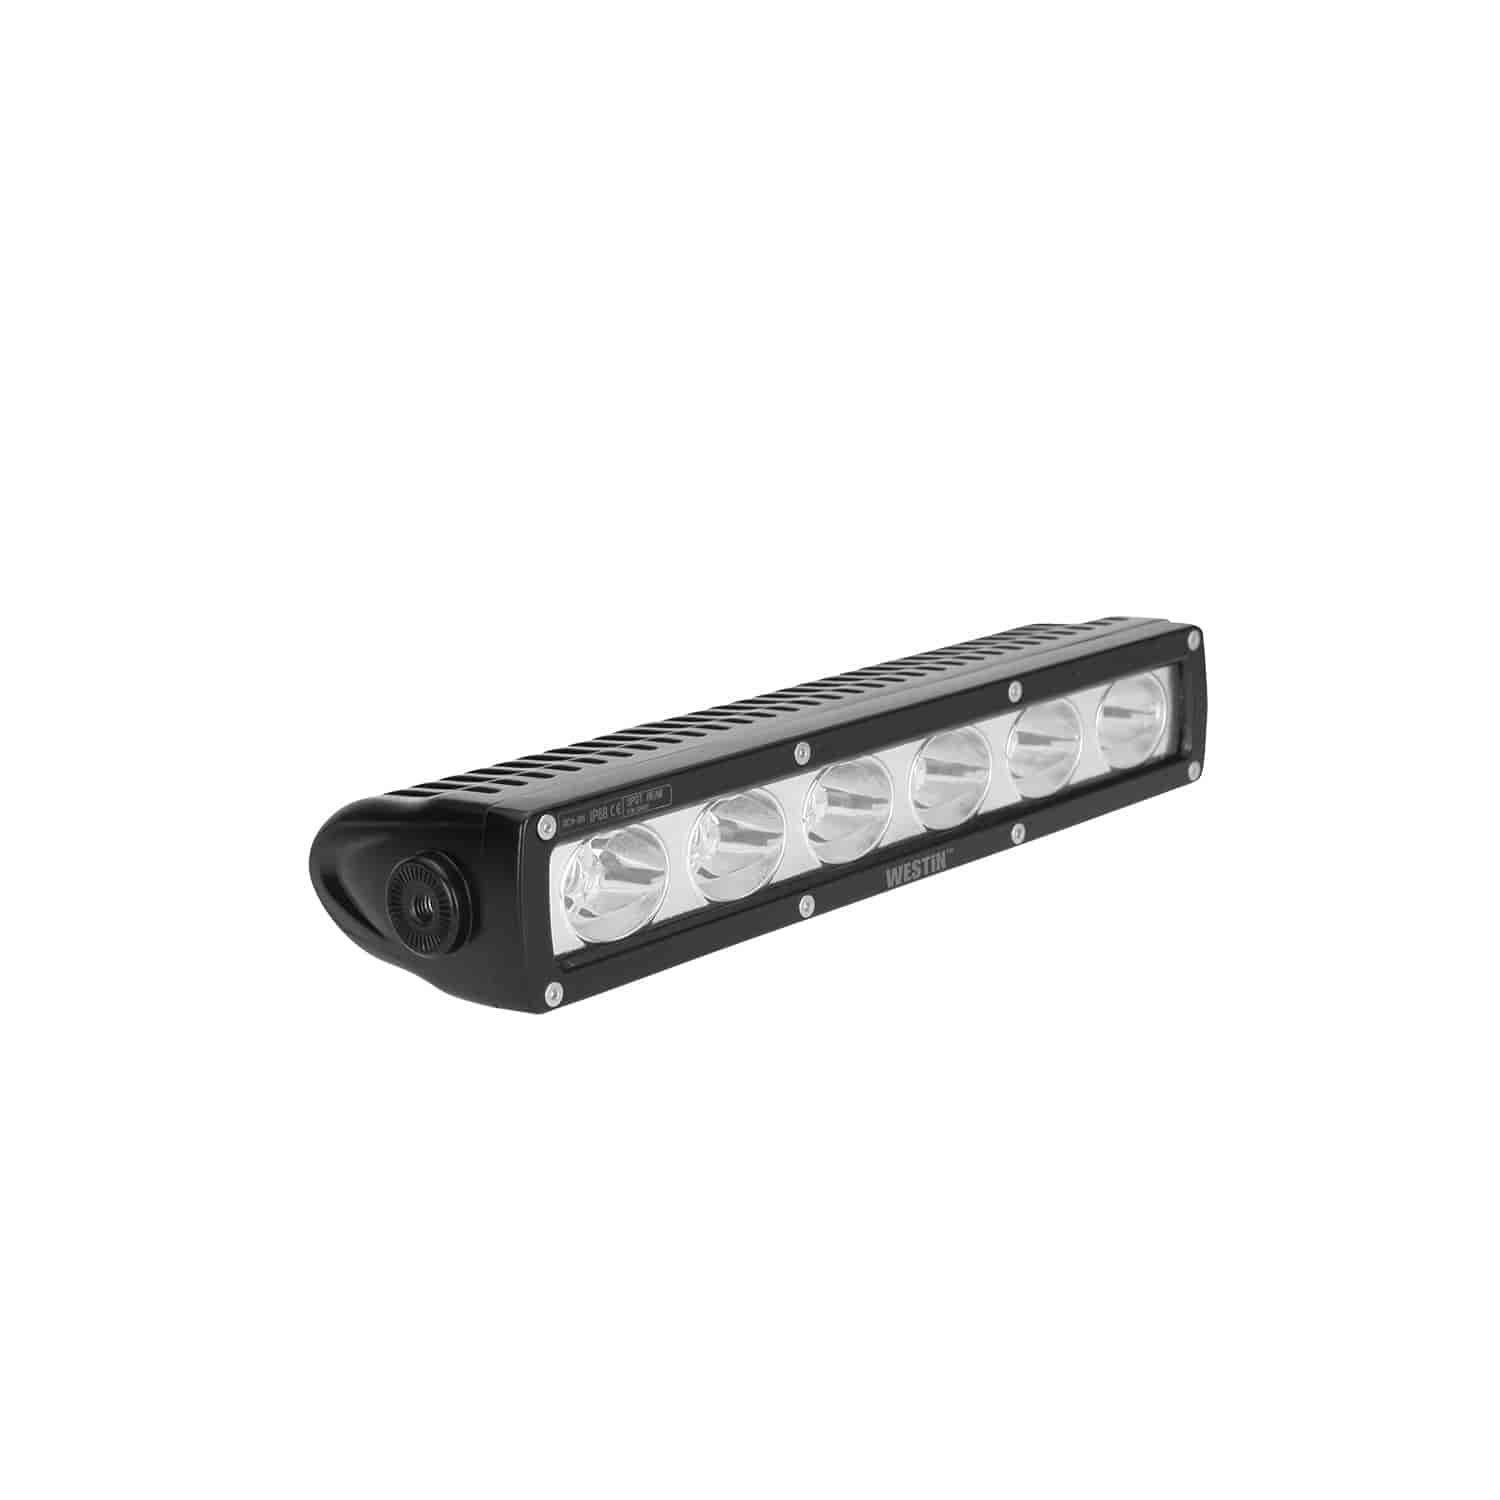 High-Performance Compact Single-Row LED Light Bar 12"